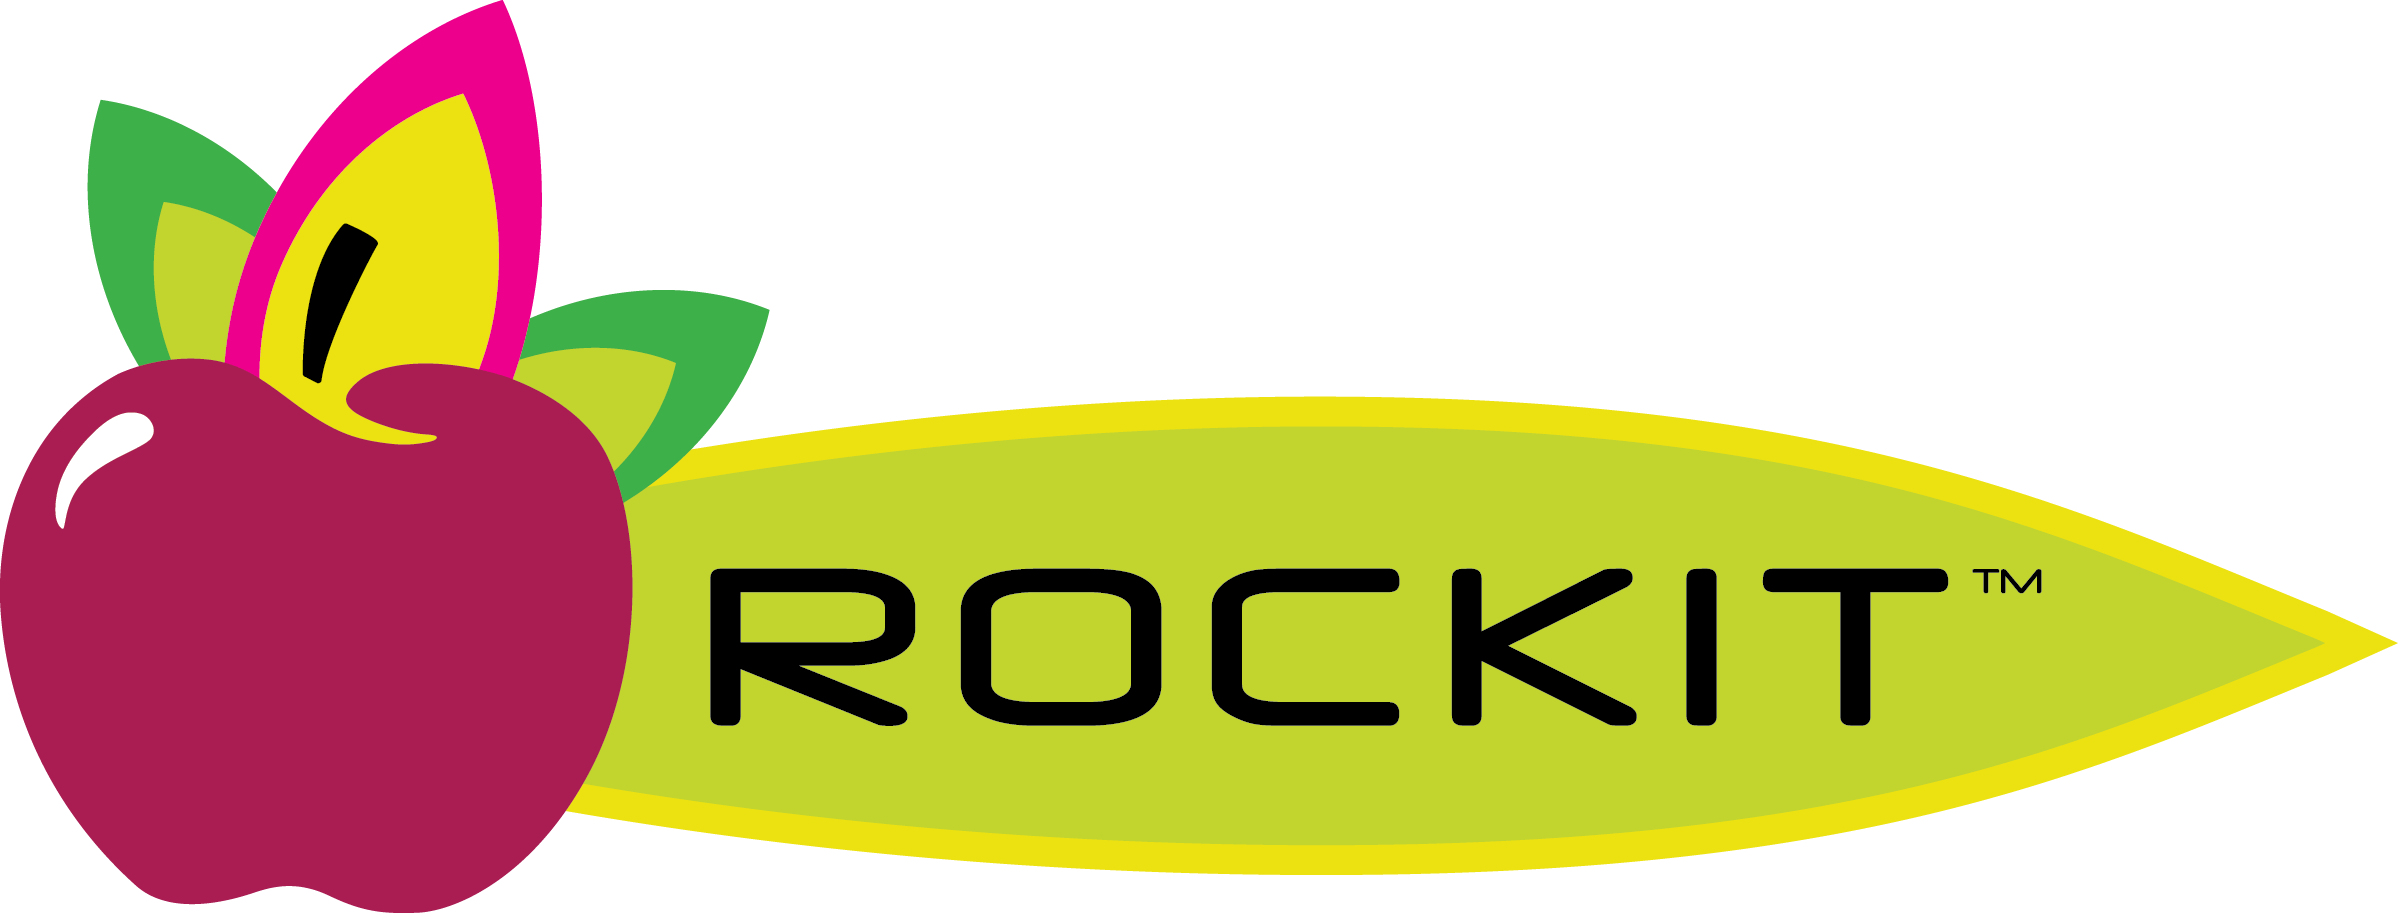 Rockit Apple - Rockit Apple Logo (2398x913)